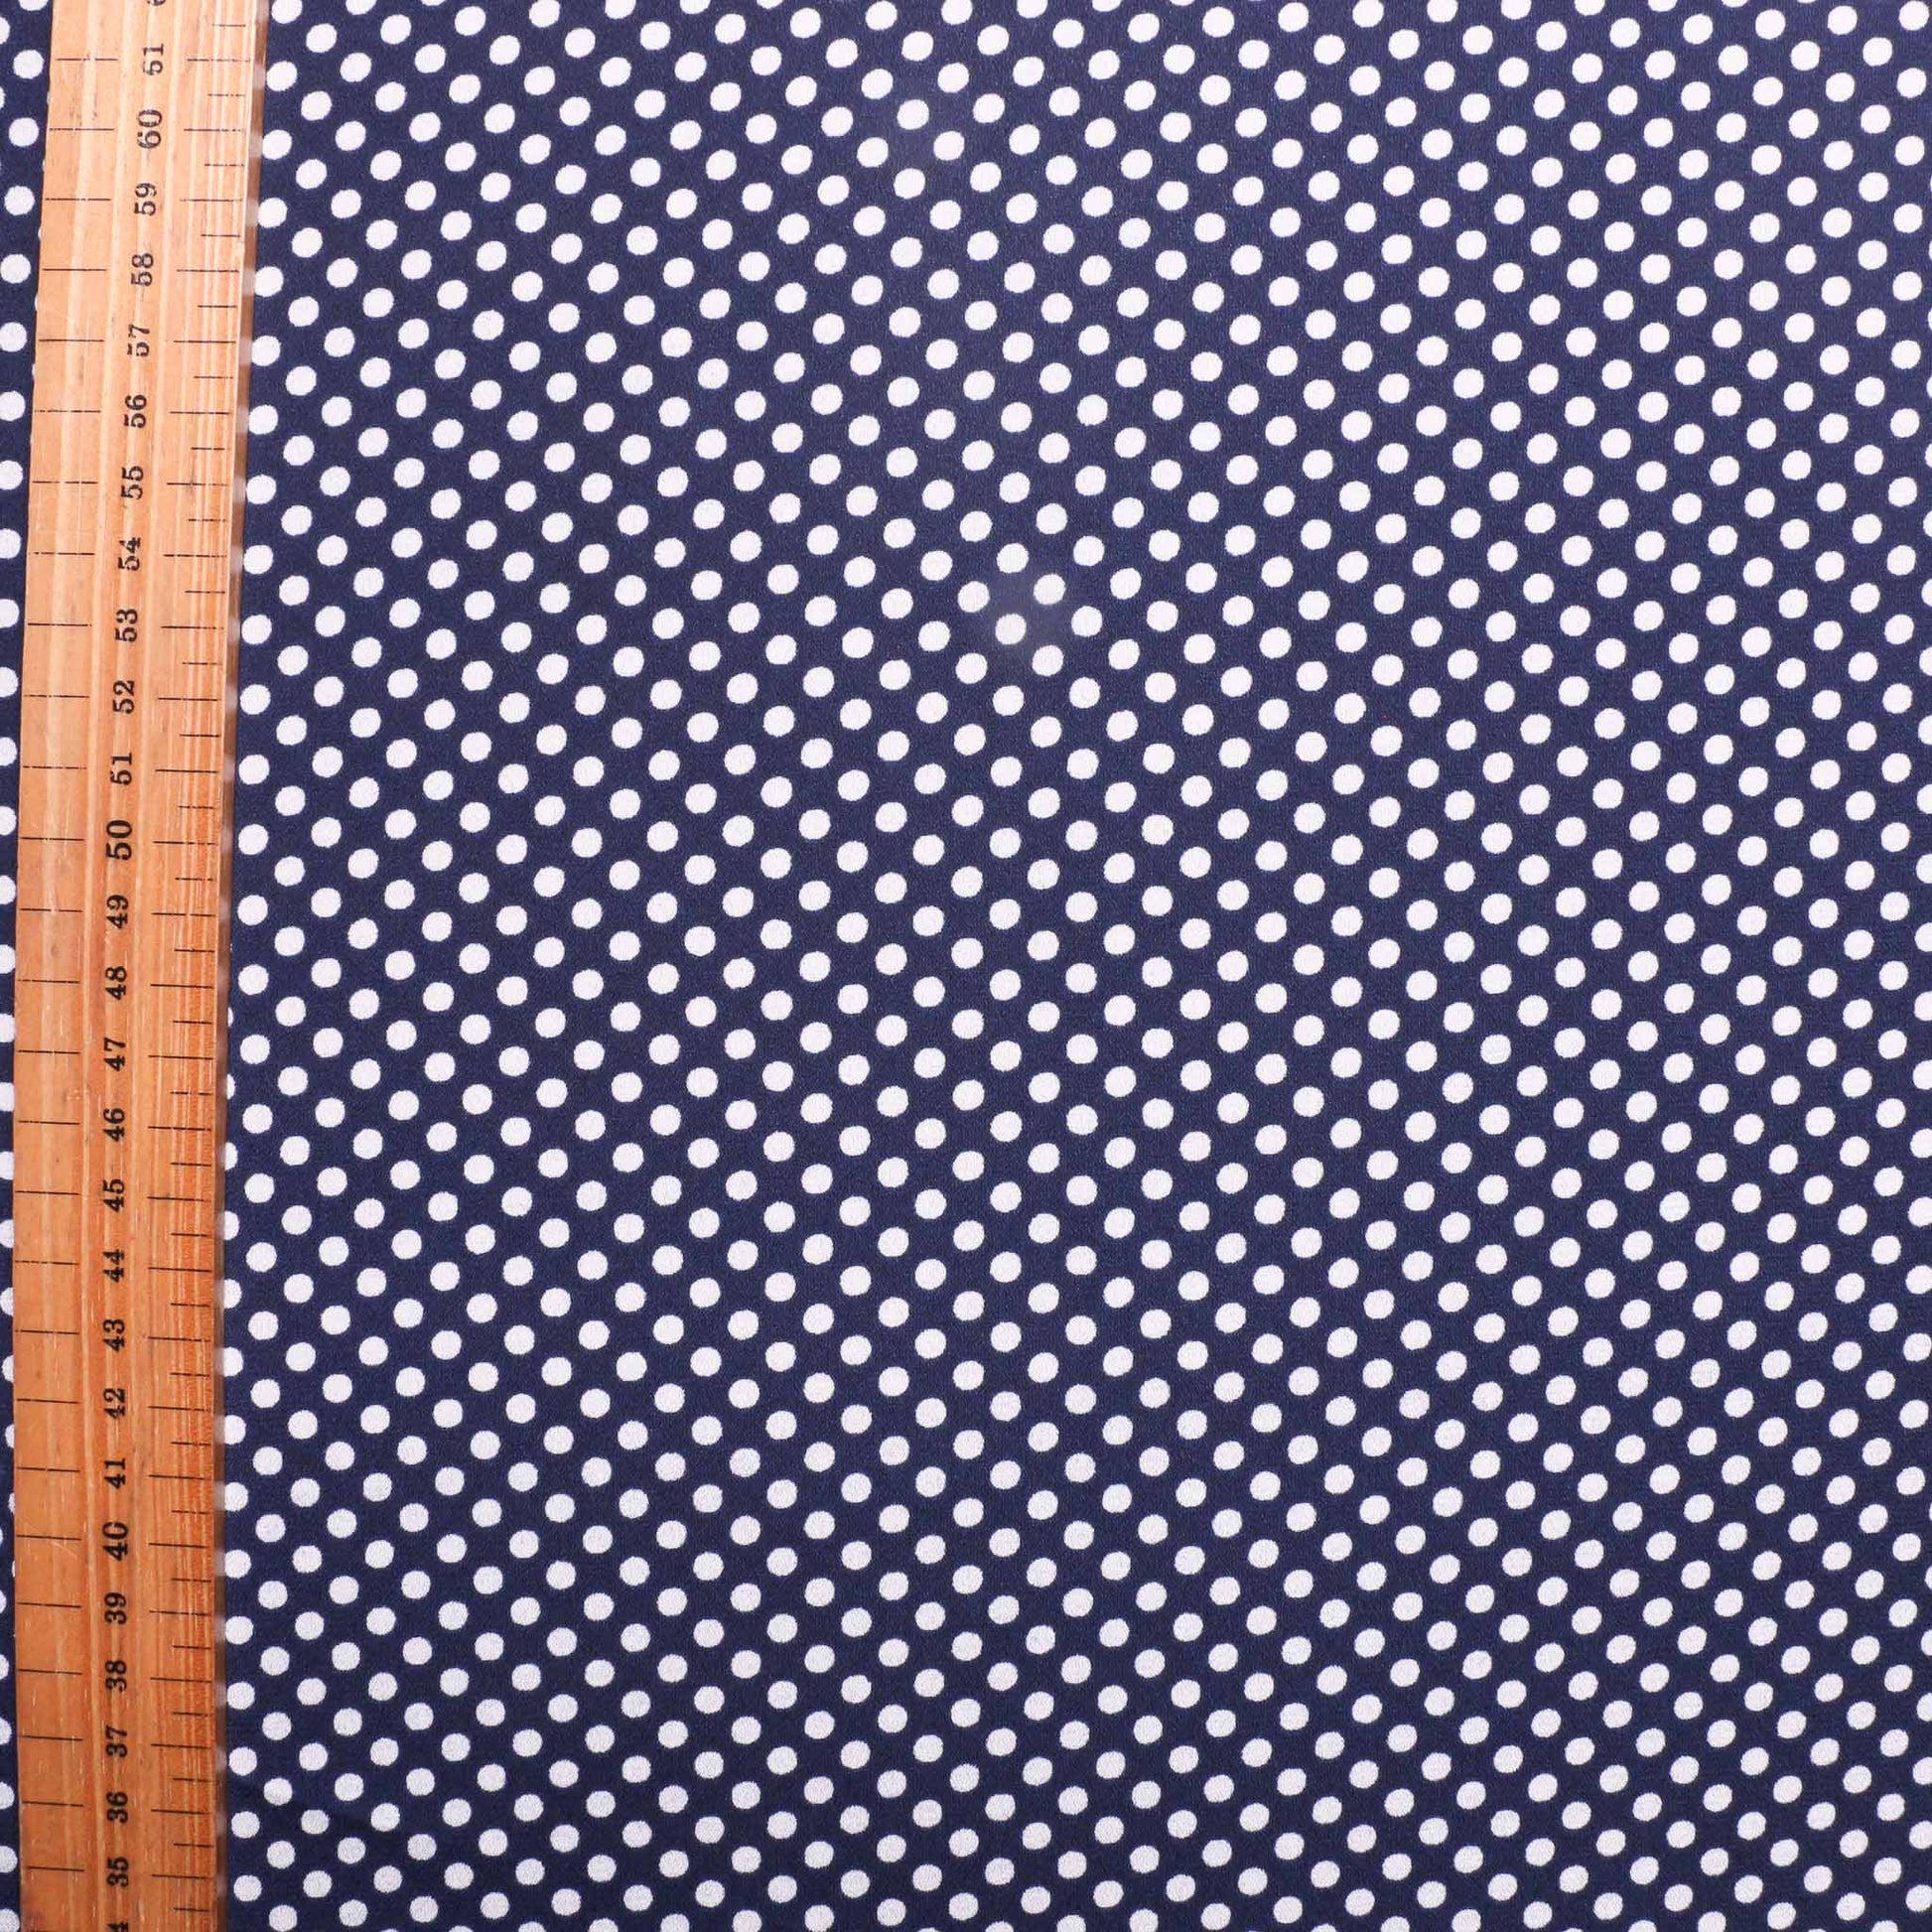 metre polka dot dressmaking fabric in navy and white uk